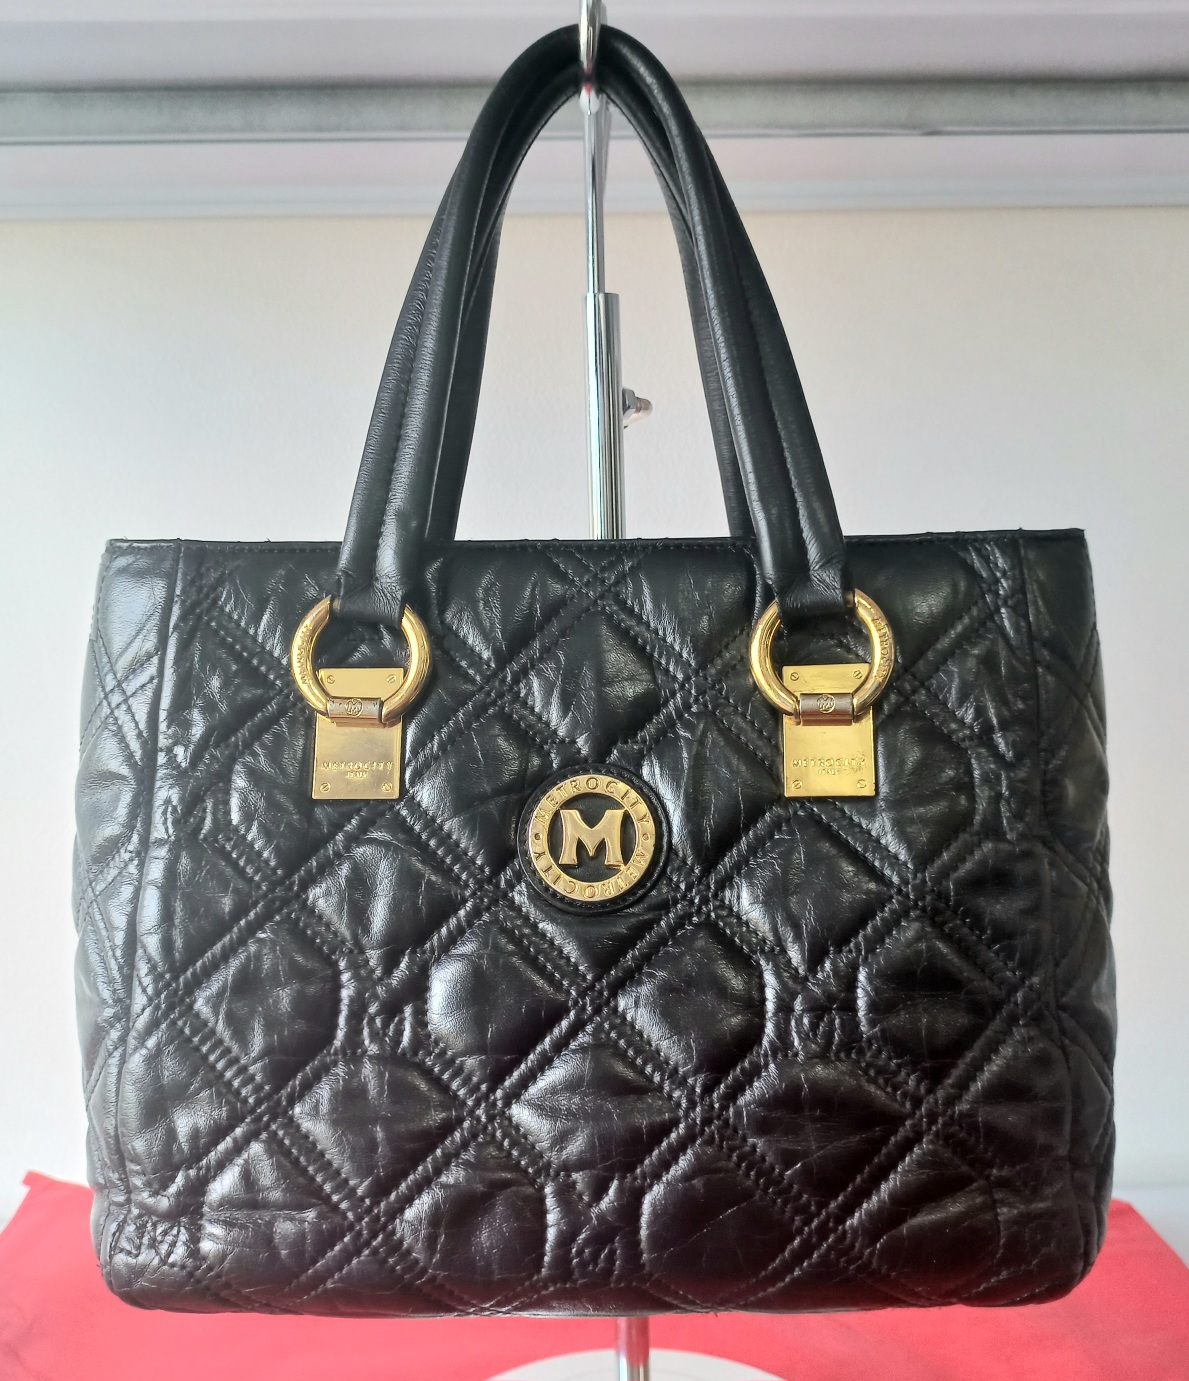 Leather Metrocity Handbags for Women - Vestiaire Collective